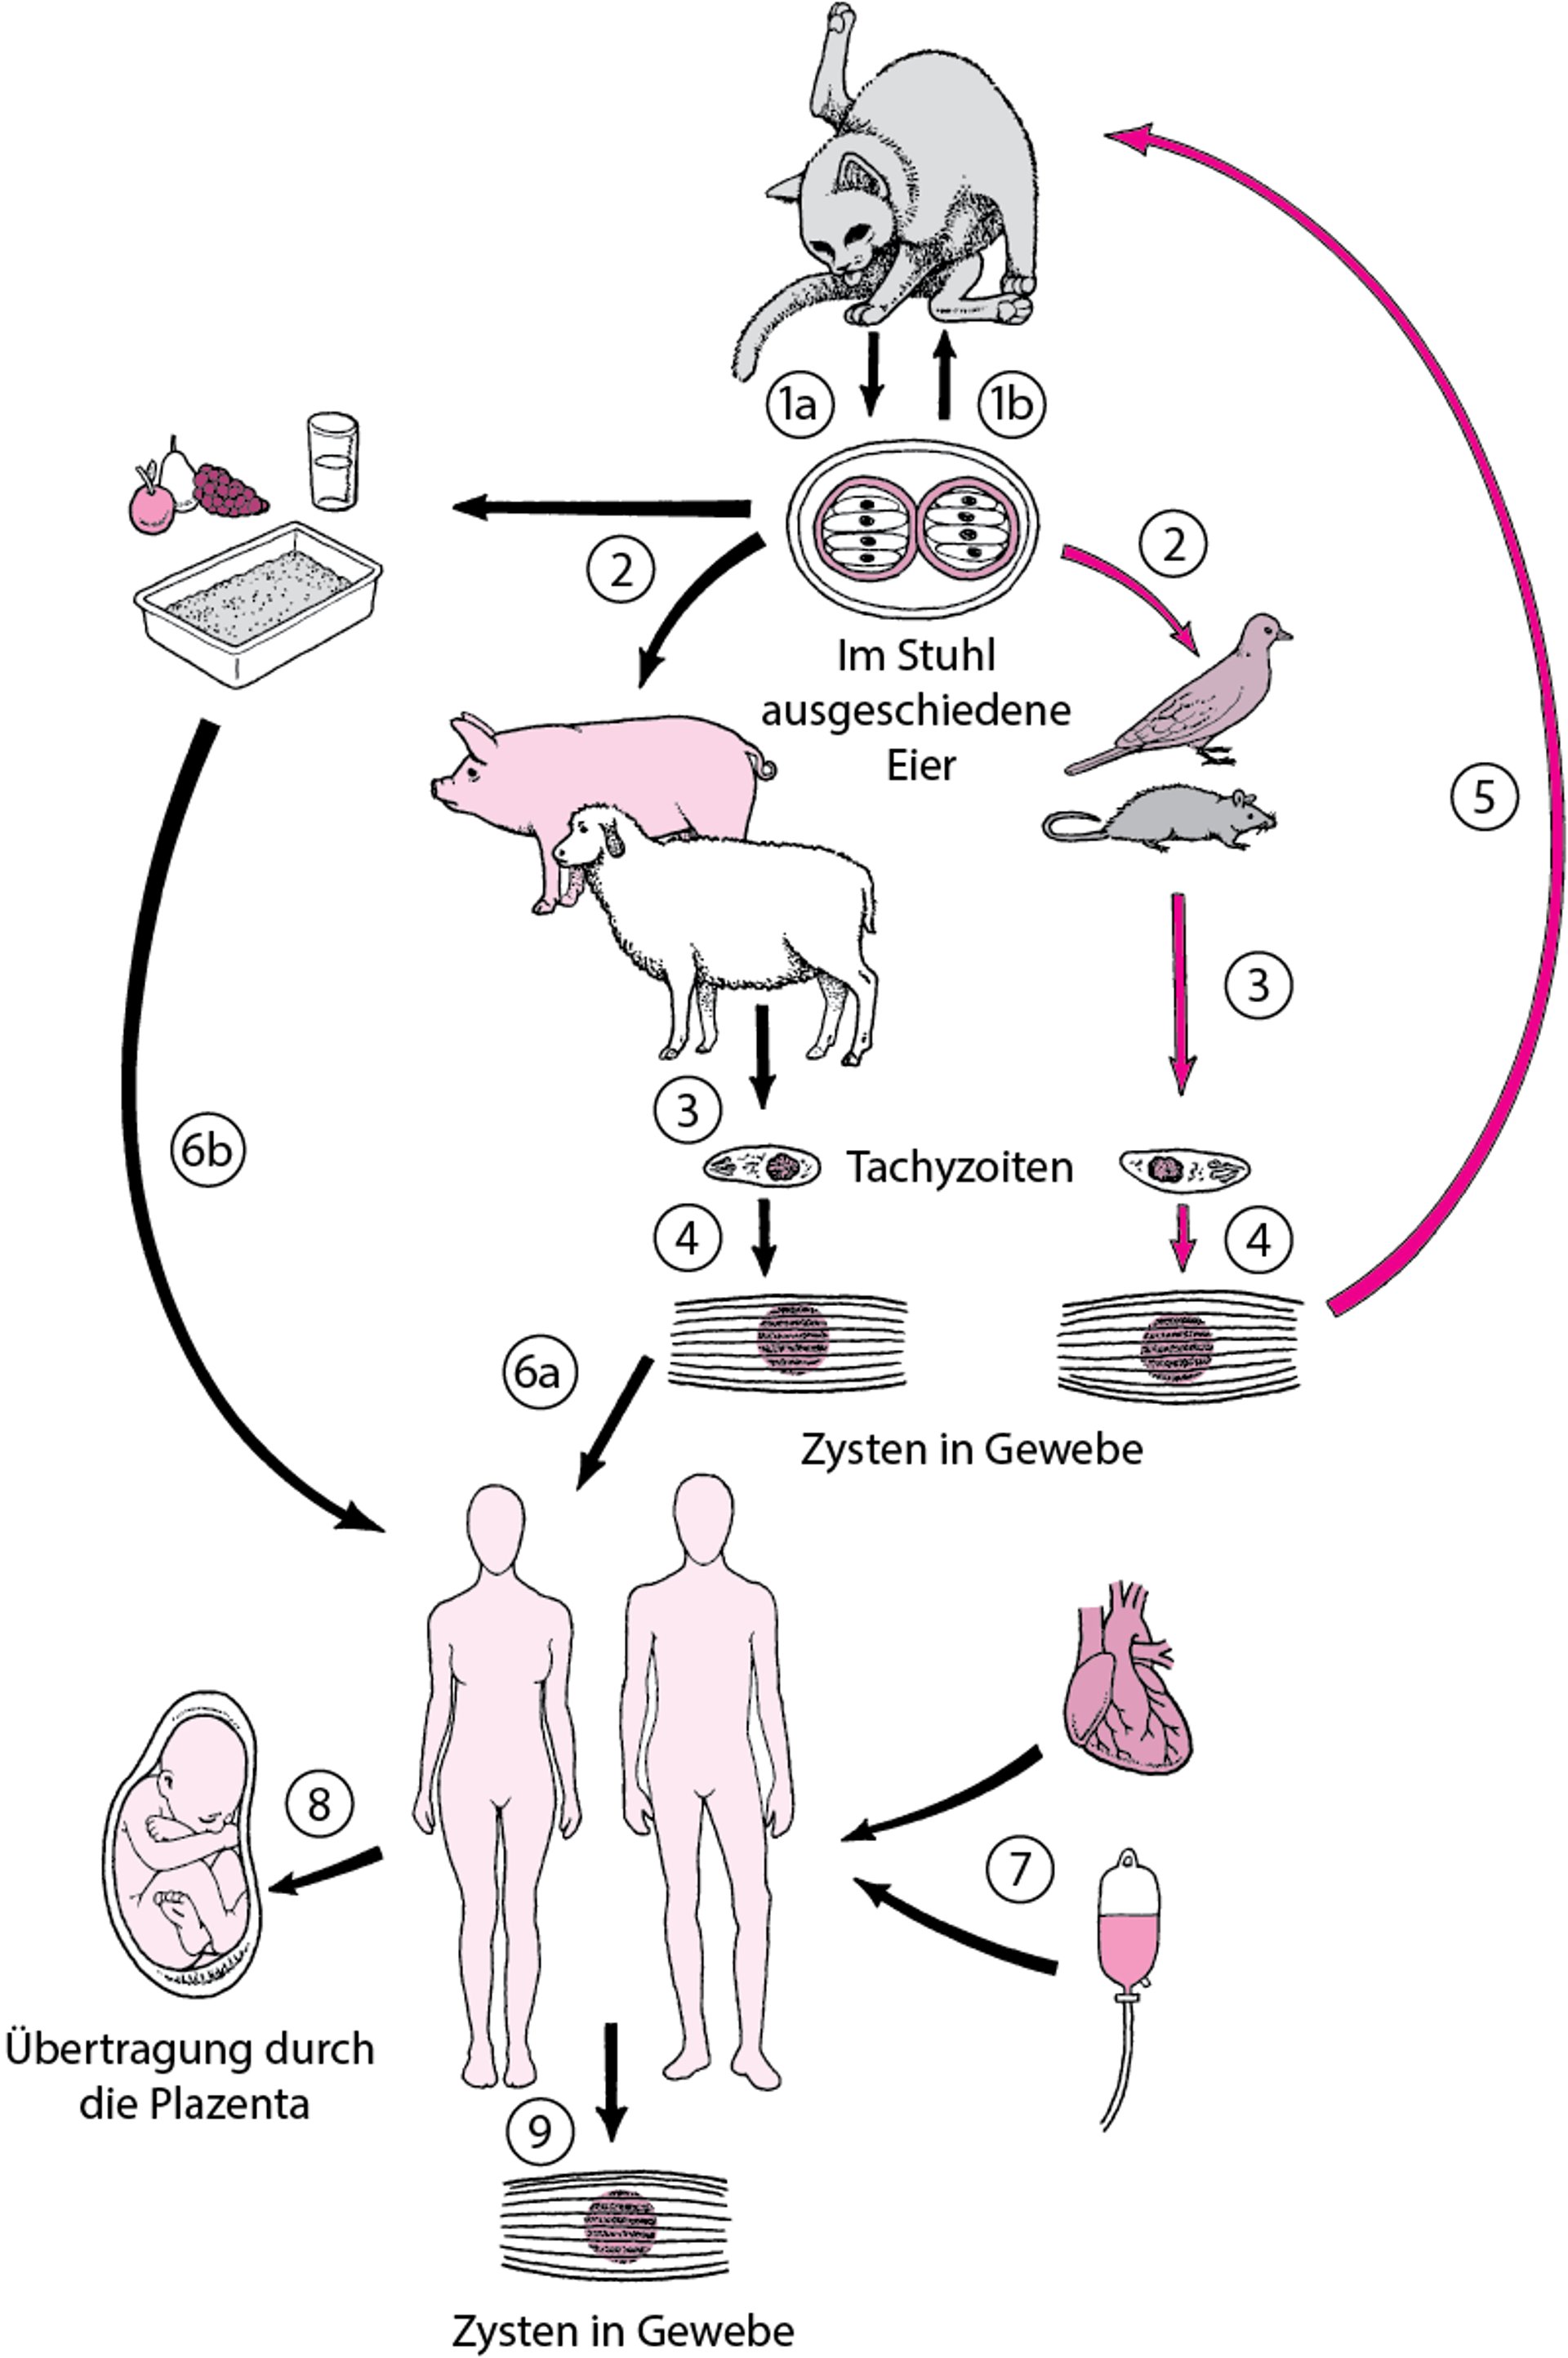 Lebenszyklus von Toxoplasma gondii